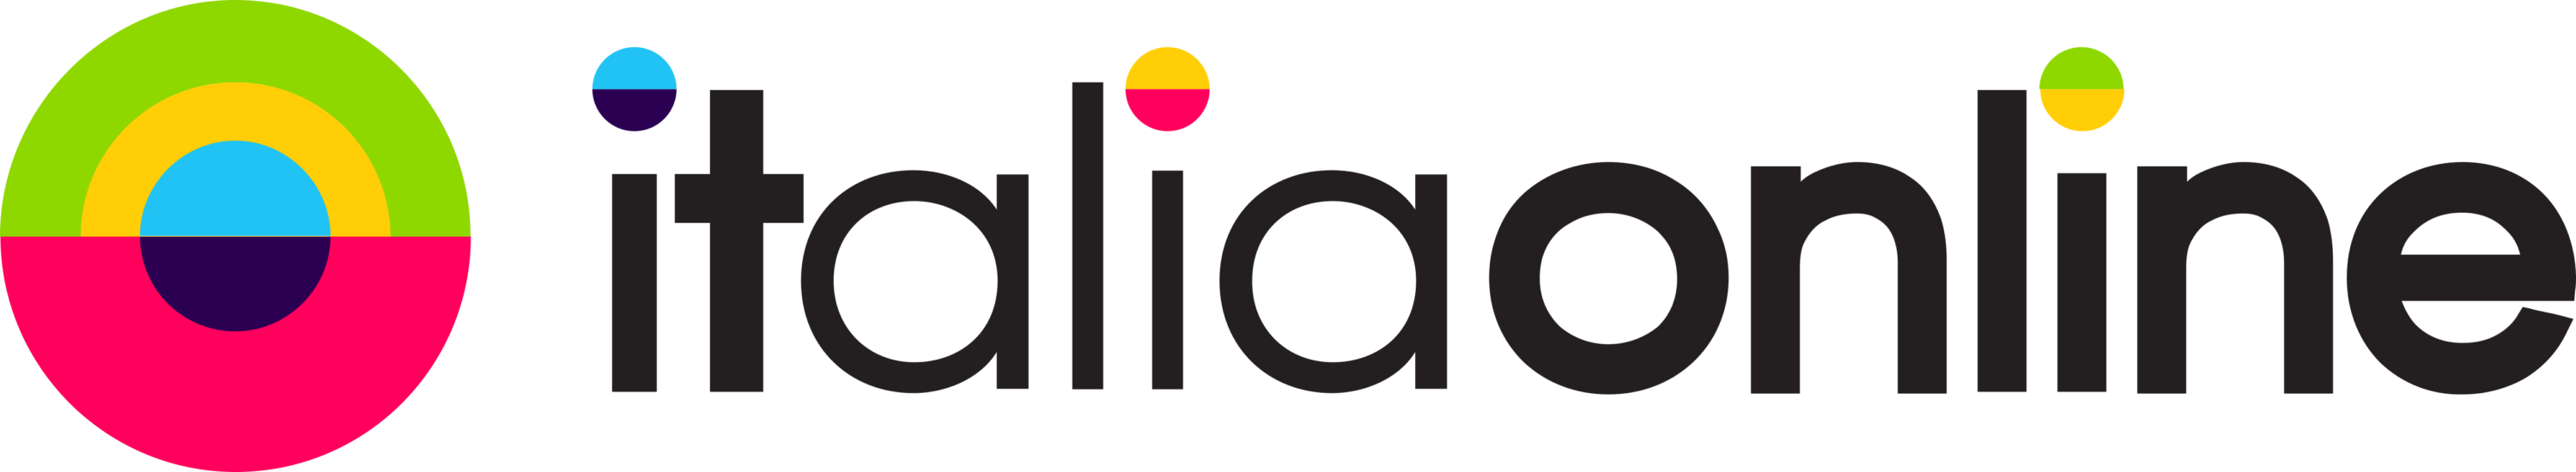 ItaliaOnline Logo